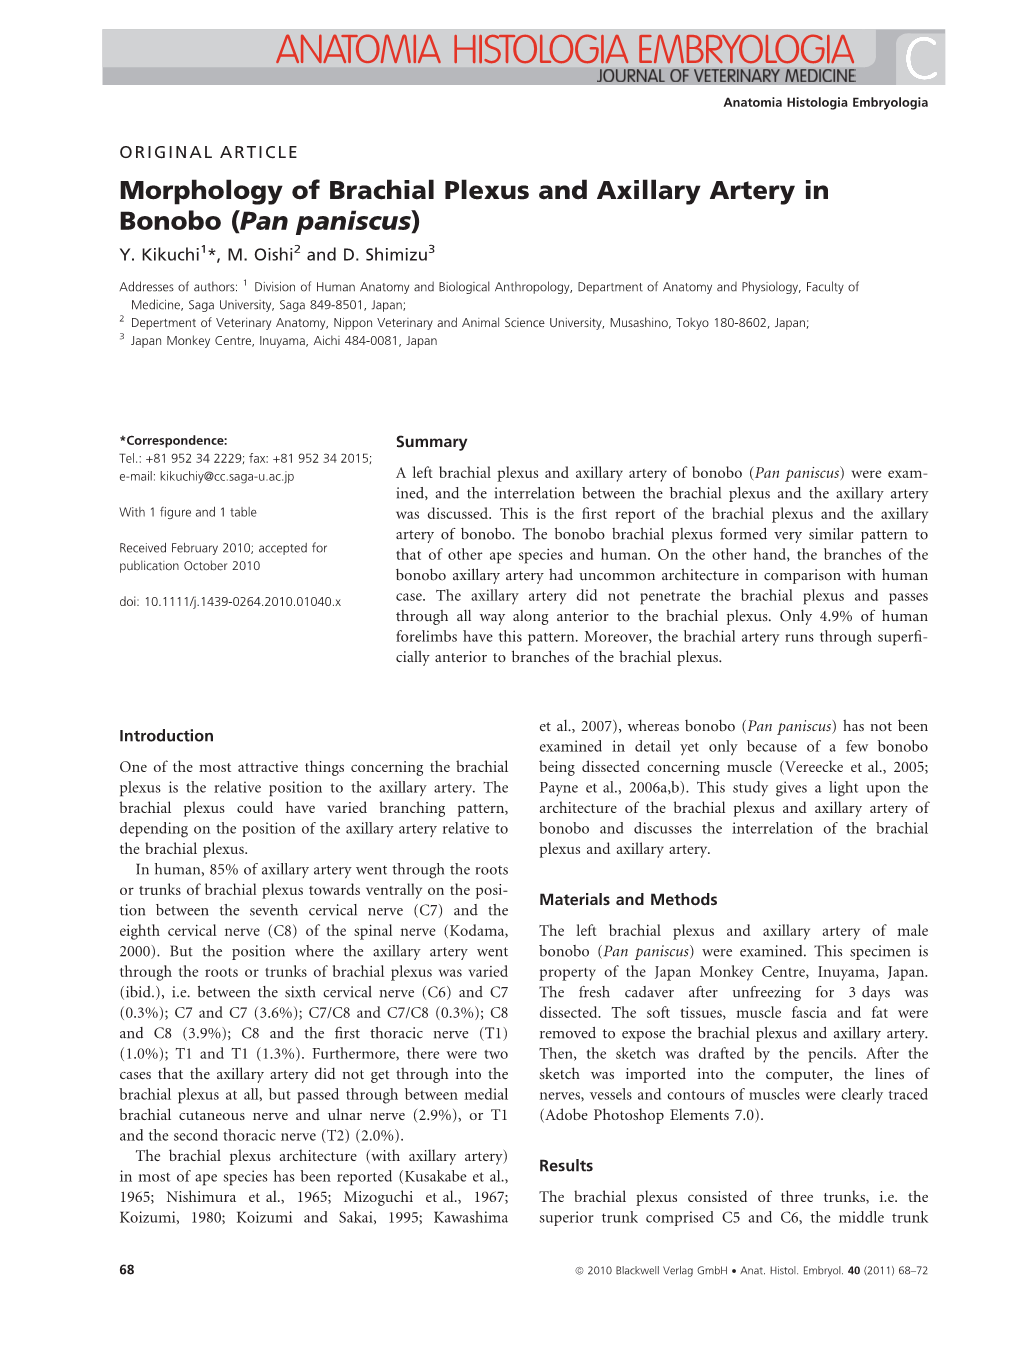 Morphology of Brachial Plexus and Axillary Artery in Bonobo (Pan Paniscus) Y